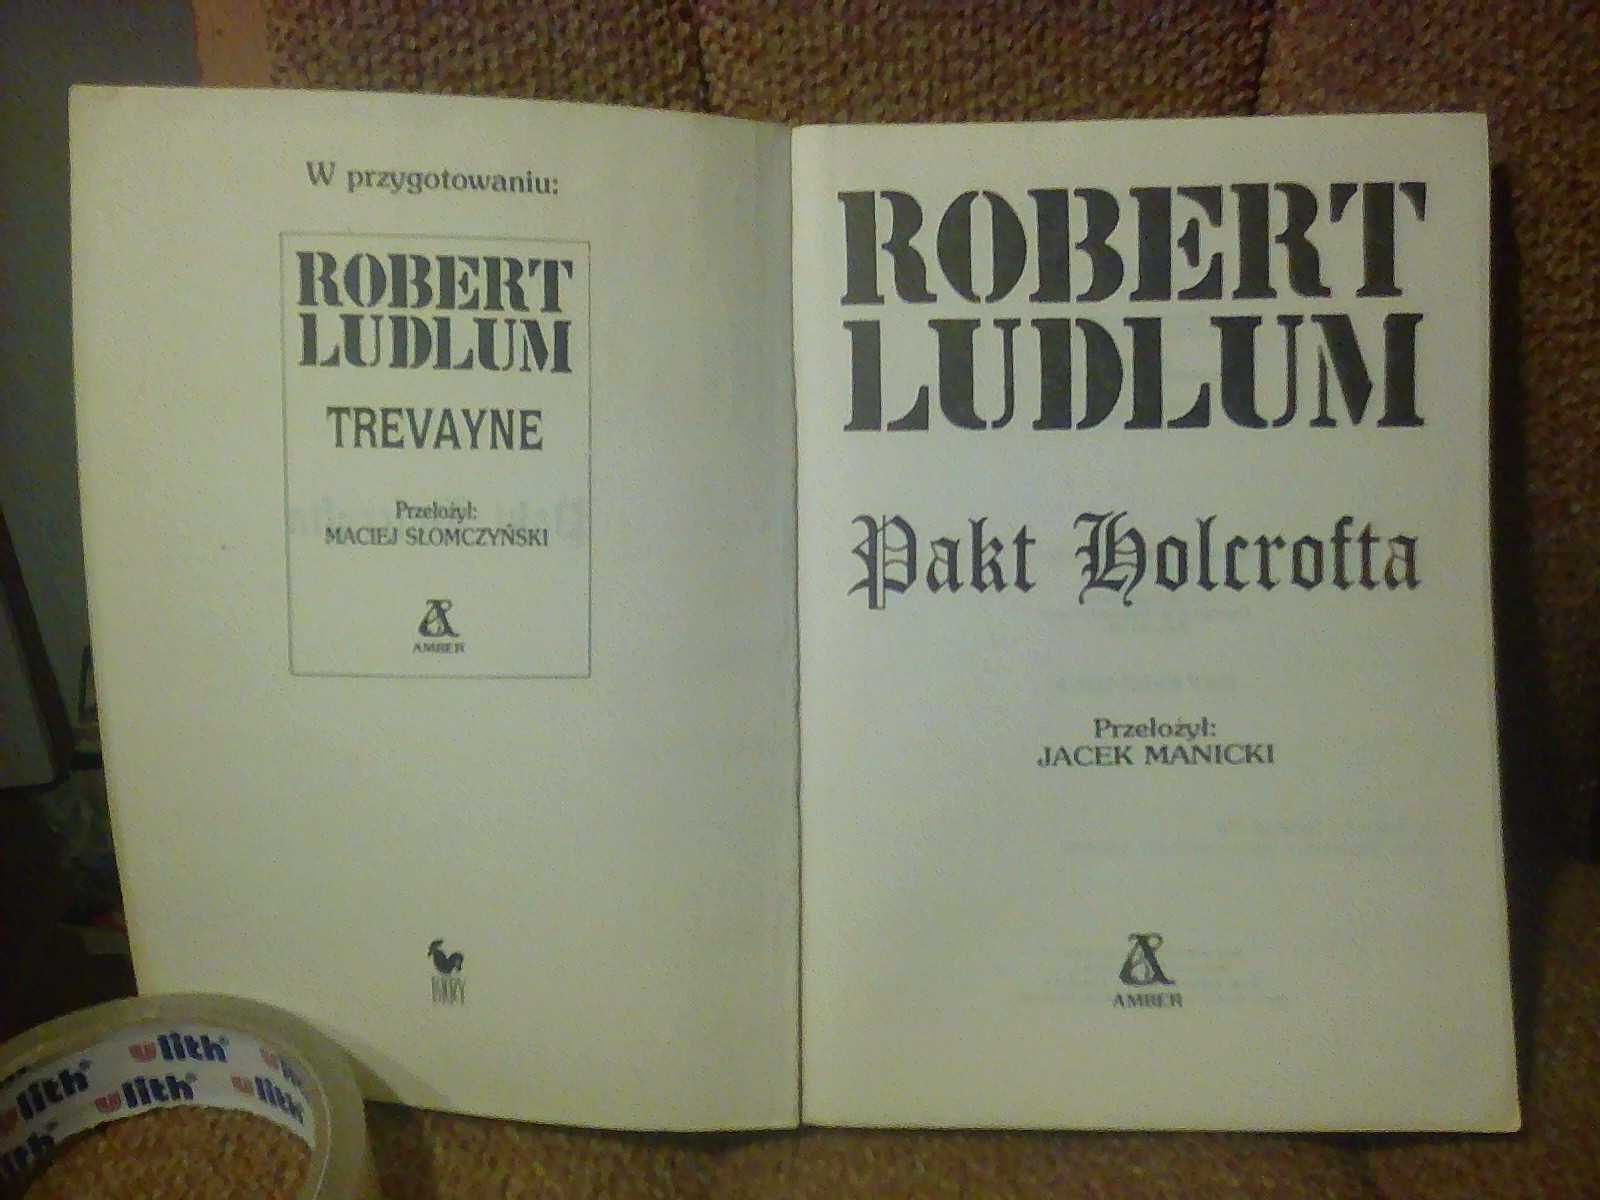 Robert LudLum
Pakt holkrofta